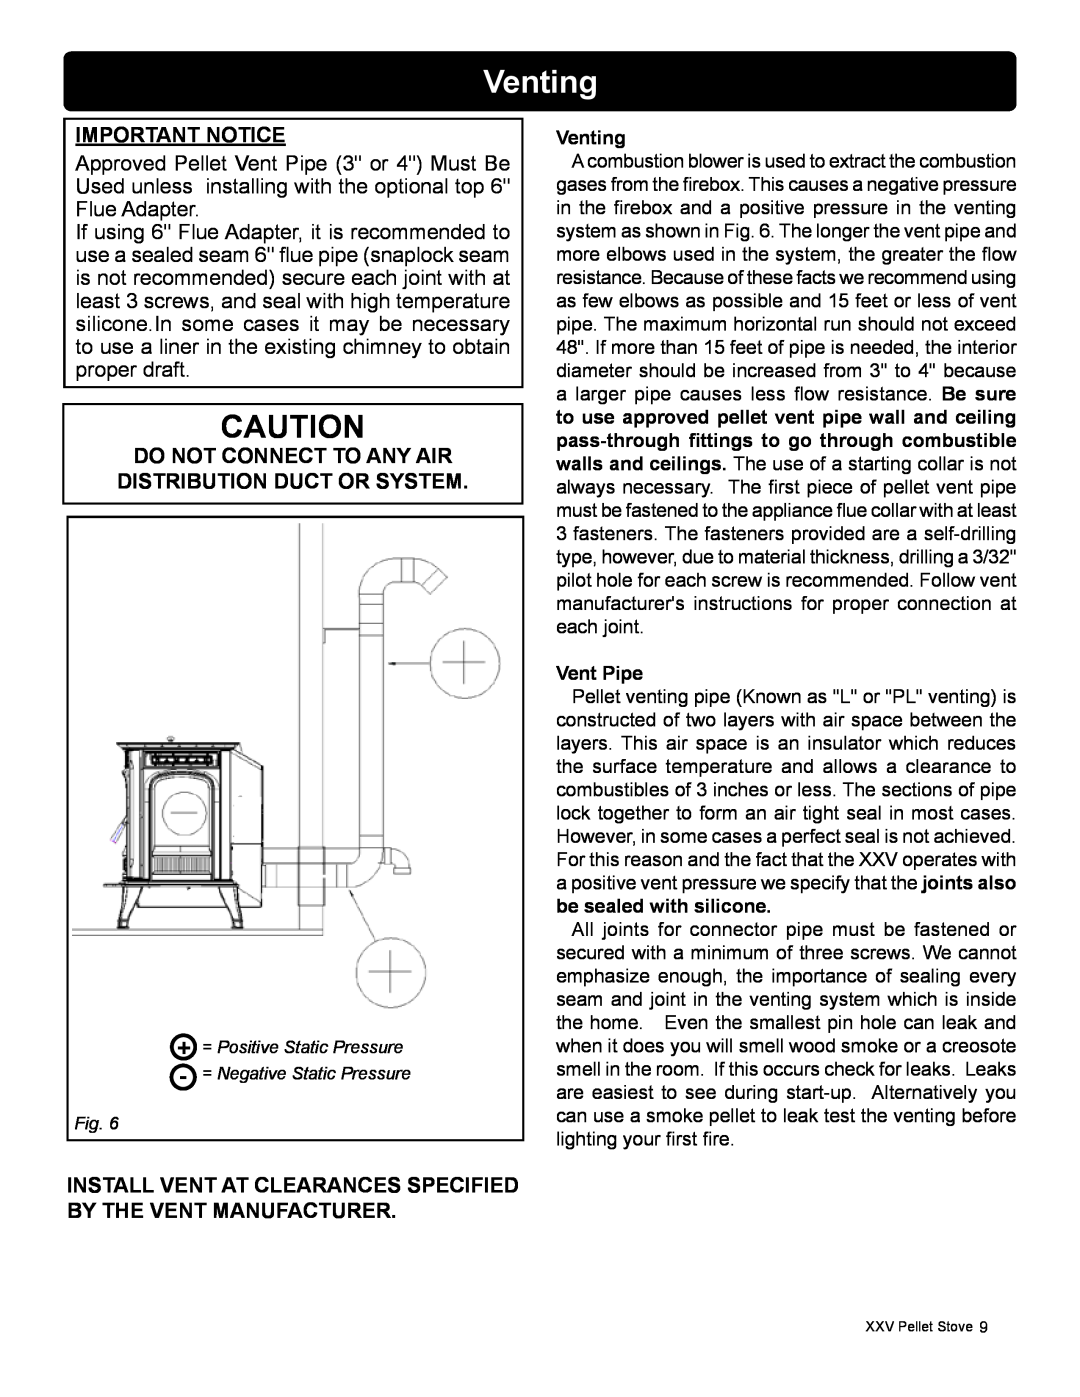 Harman Stove Company R16 manual Venting, Important Notice 